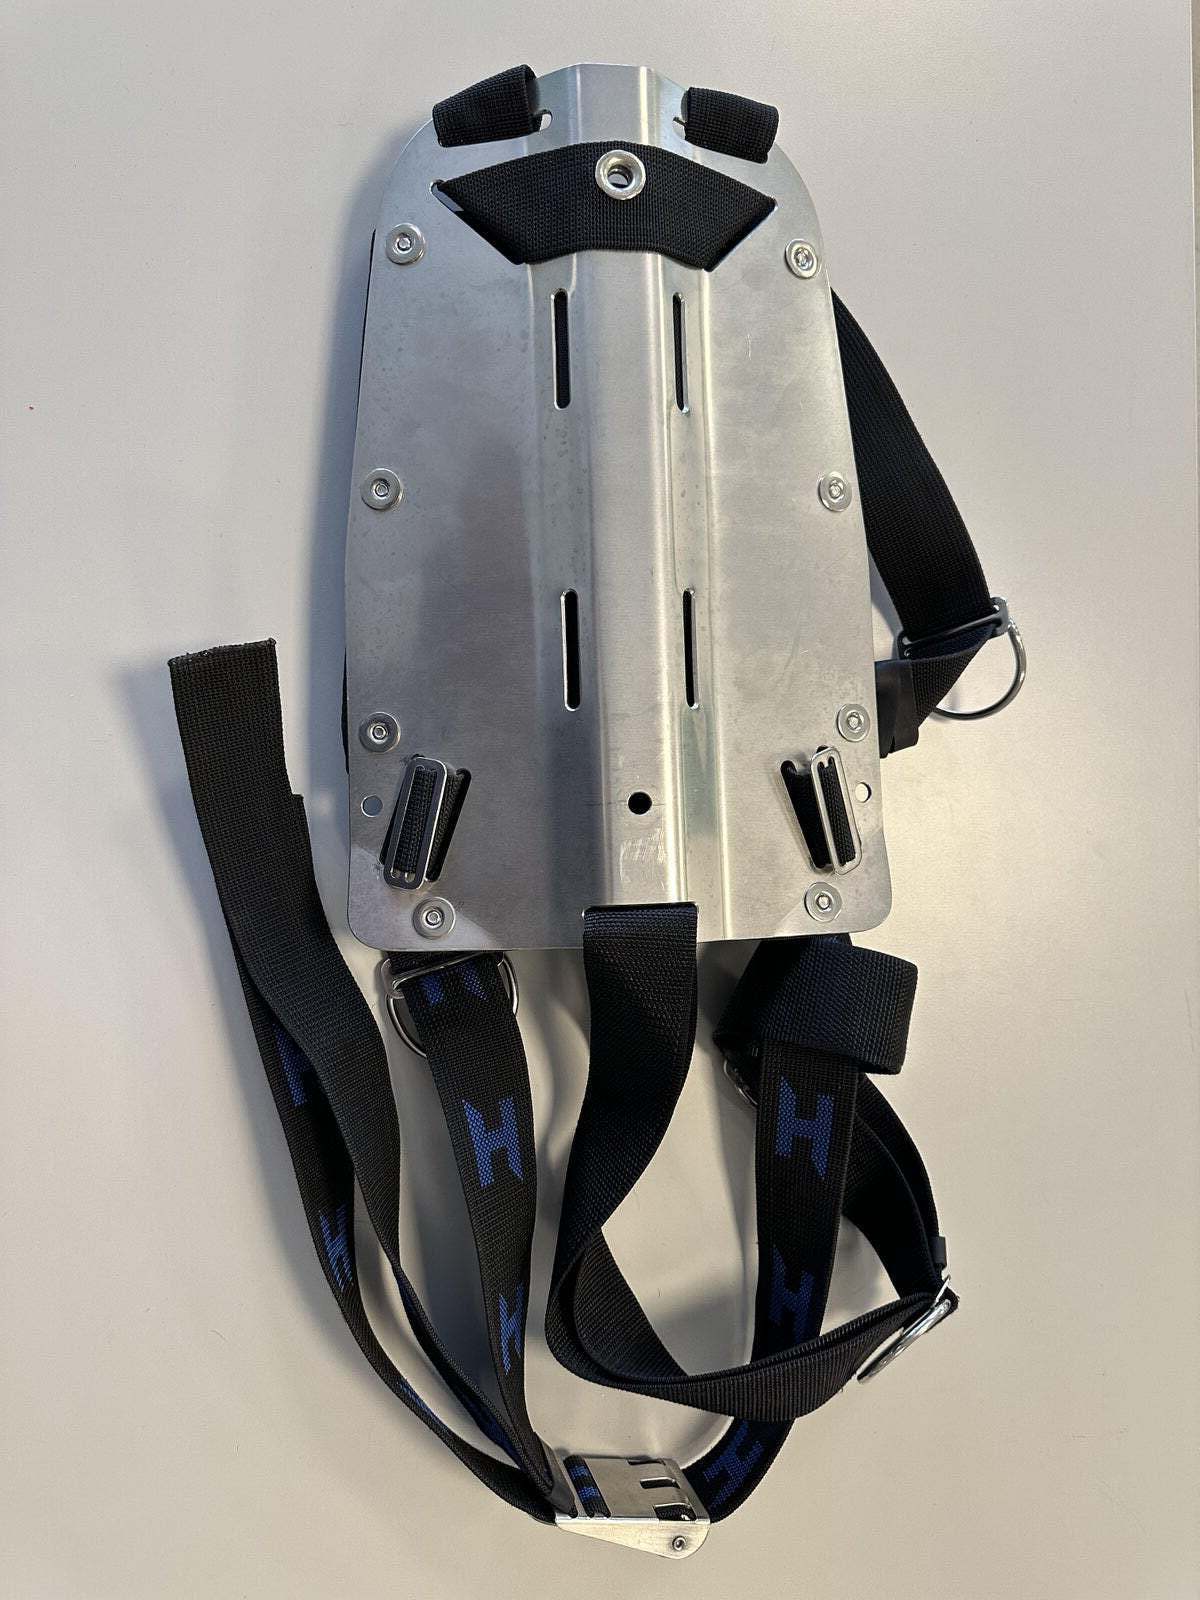 Halcyon Bagplade med One-piece harness og MC Storage lomme